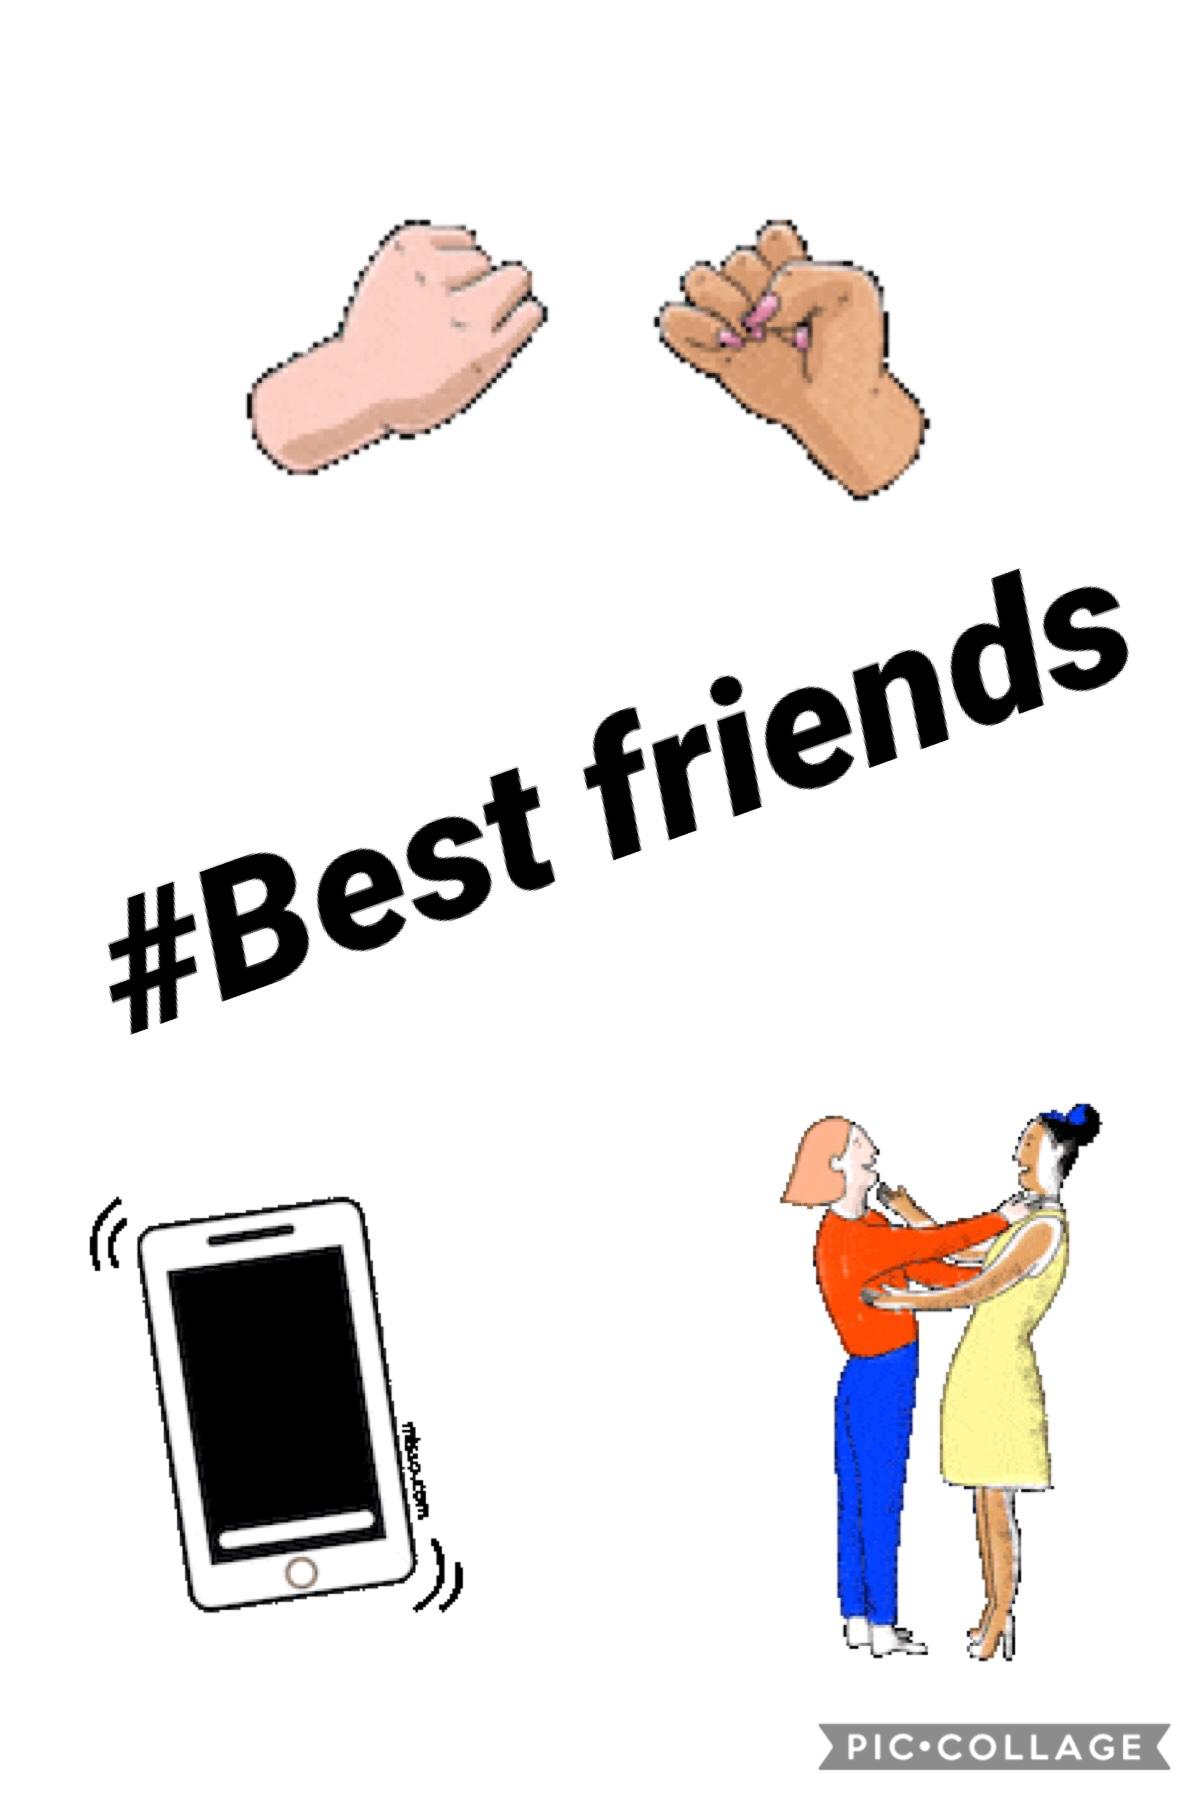 #best friend goals 🐵🙈